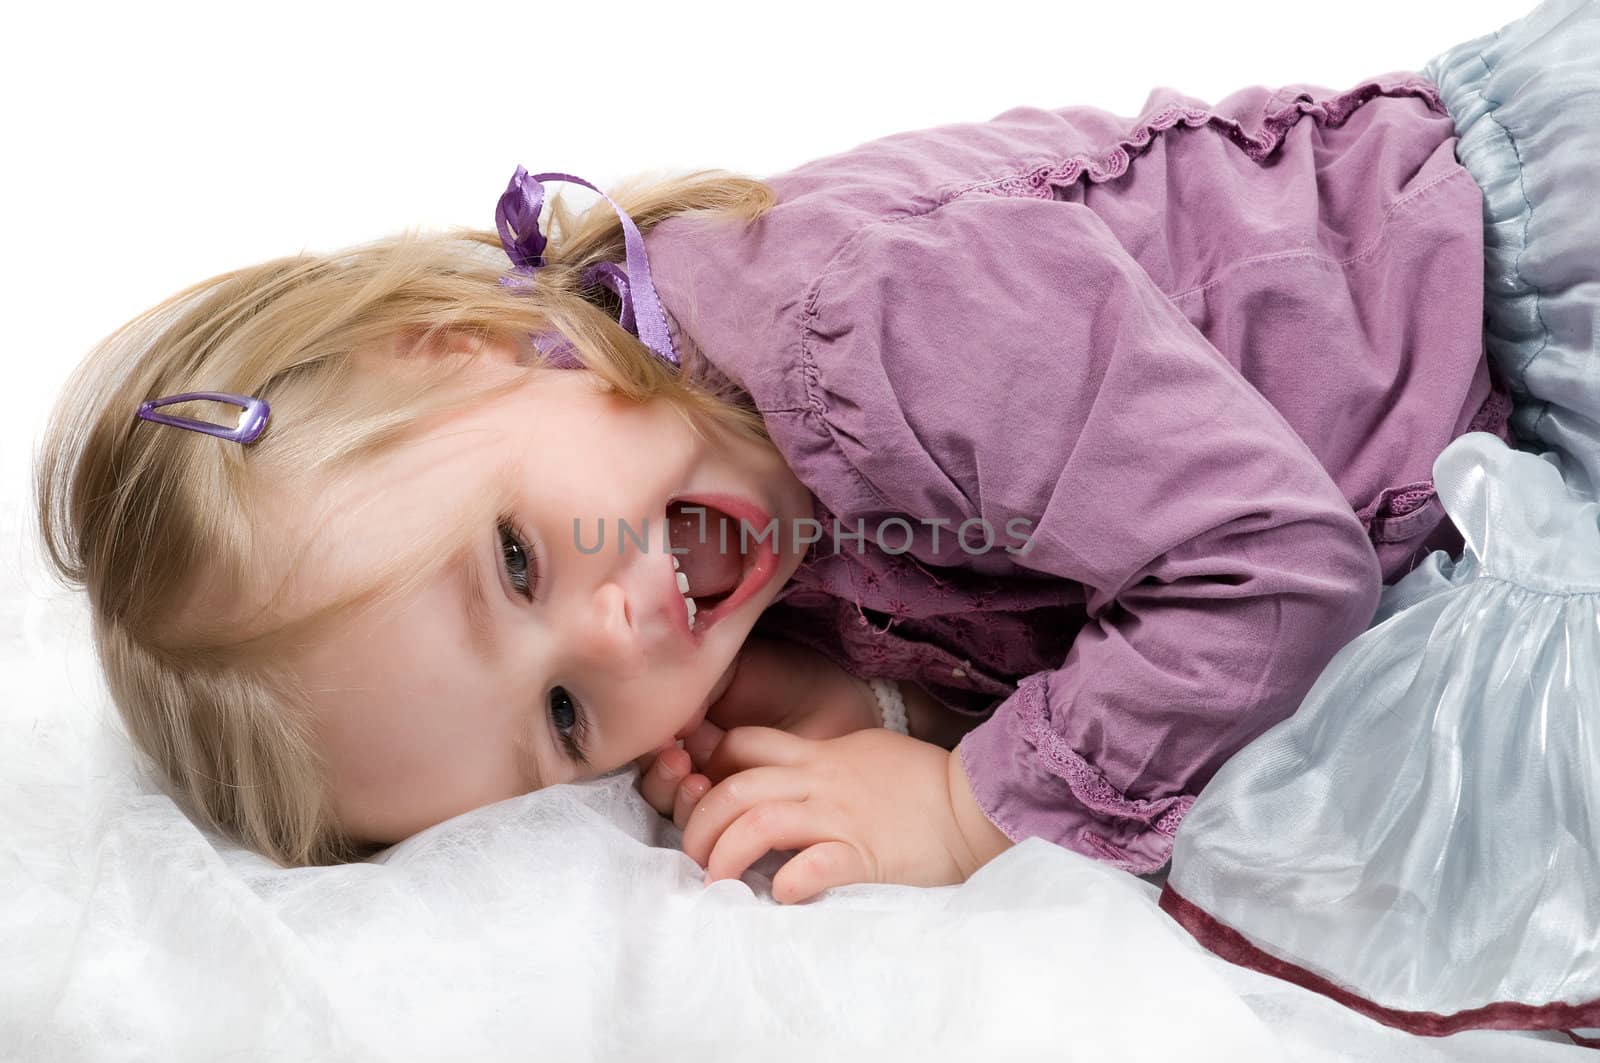 A little girl lying on the floor in studio